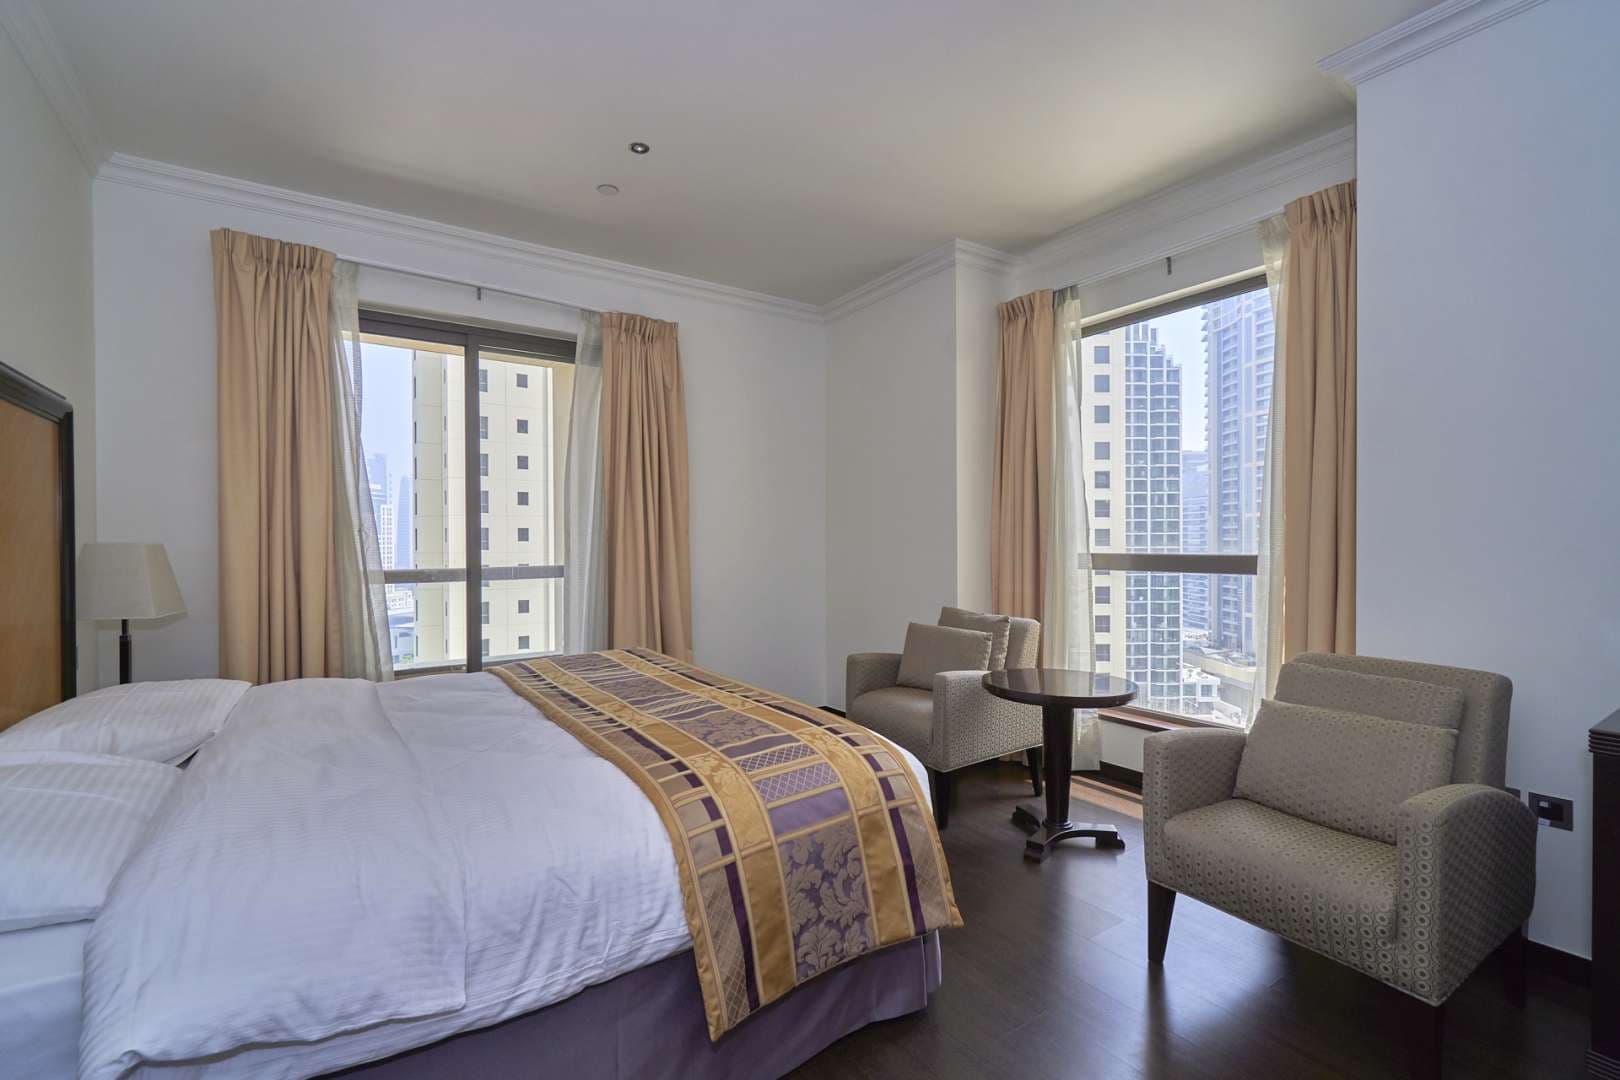 3 Bedroom Apartment For Rent Murjan Lp08238 2c567031c3d6a80.jpg